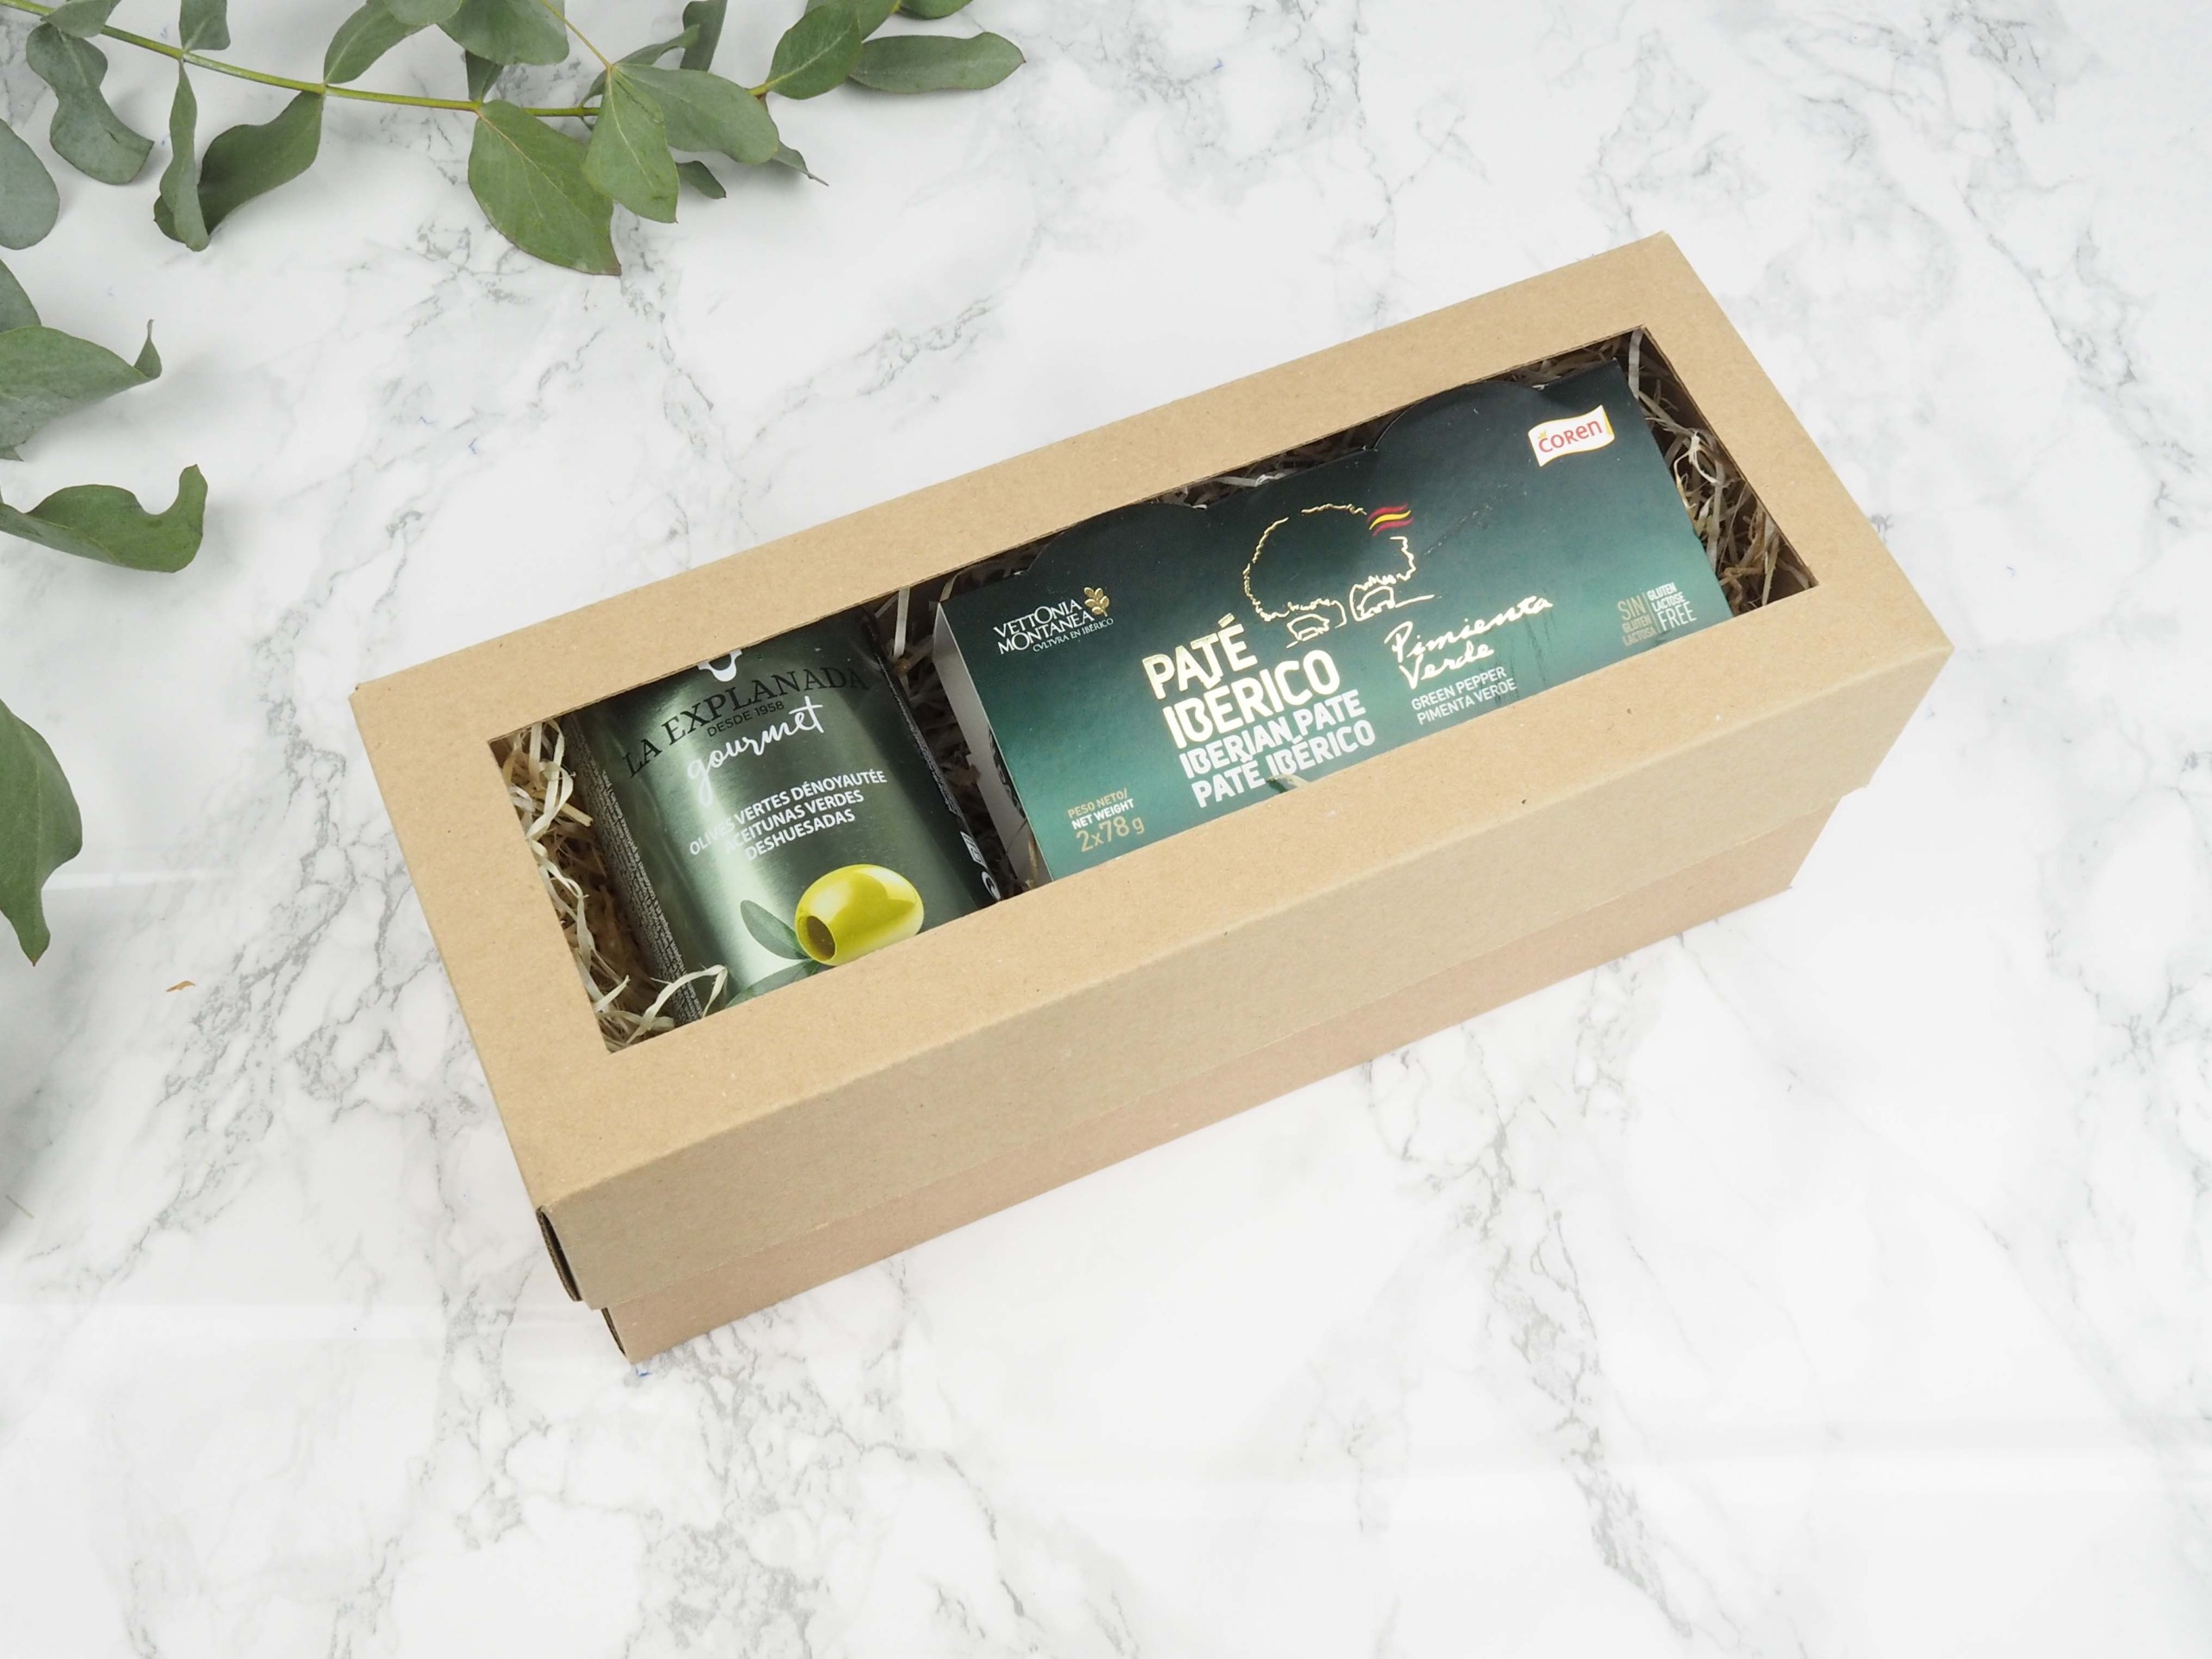 Dárkový balíček Pate Green v sobě obsahuje zelené olivy bez pecek a játrové mini paštičky z výběrového vepřového masa Ibérico.